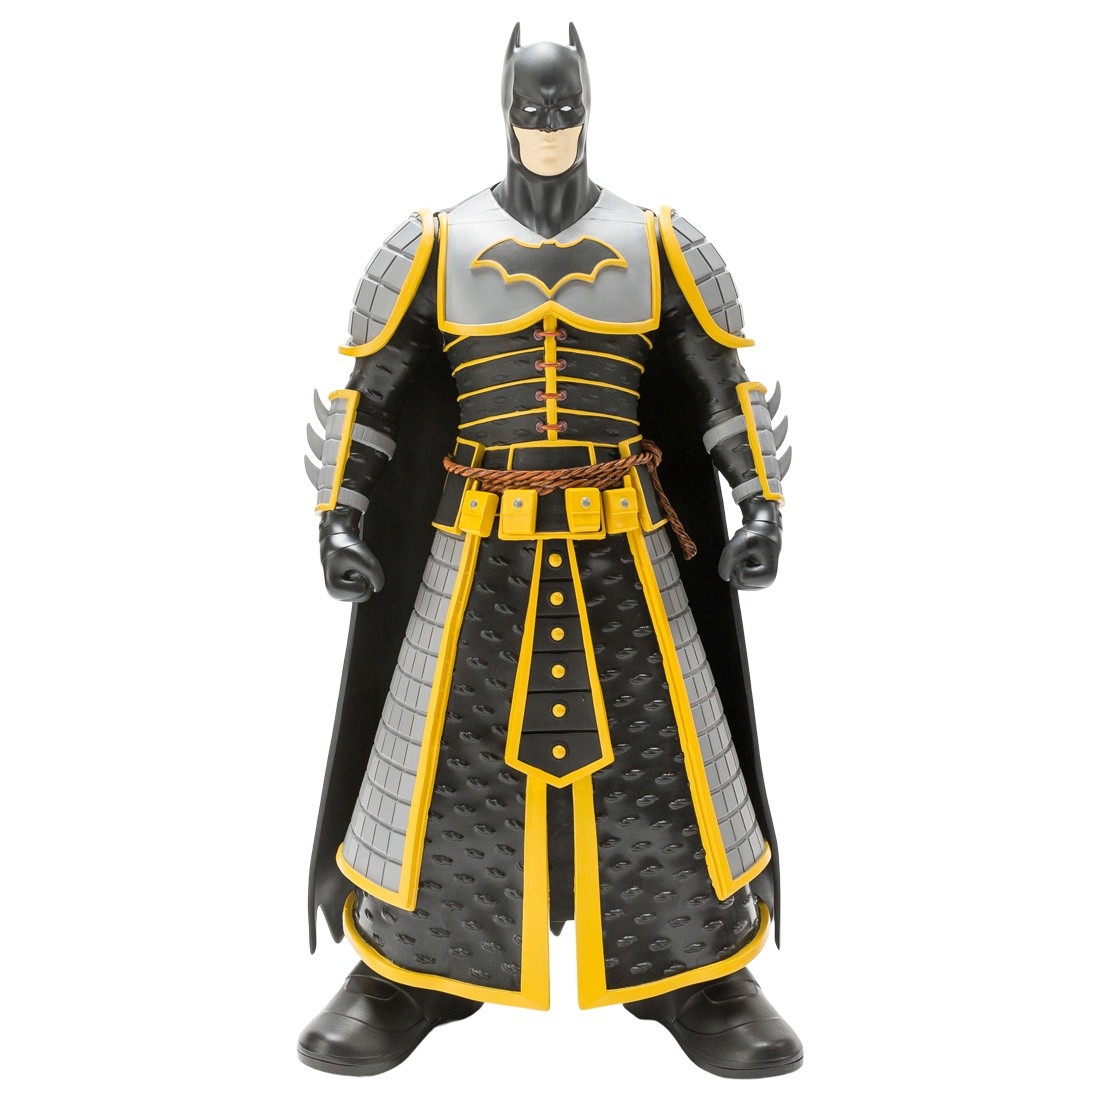 MINDstyle x DC x Imperial Palace 15 Inch Batman Figure (black)